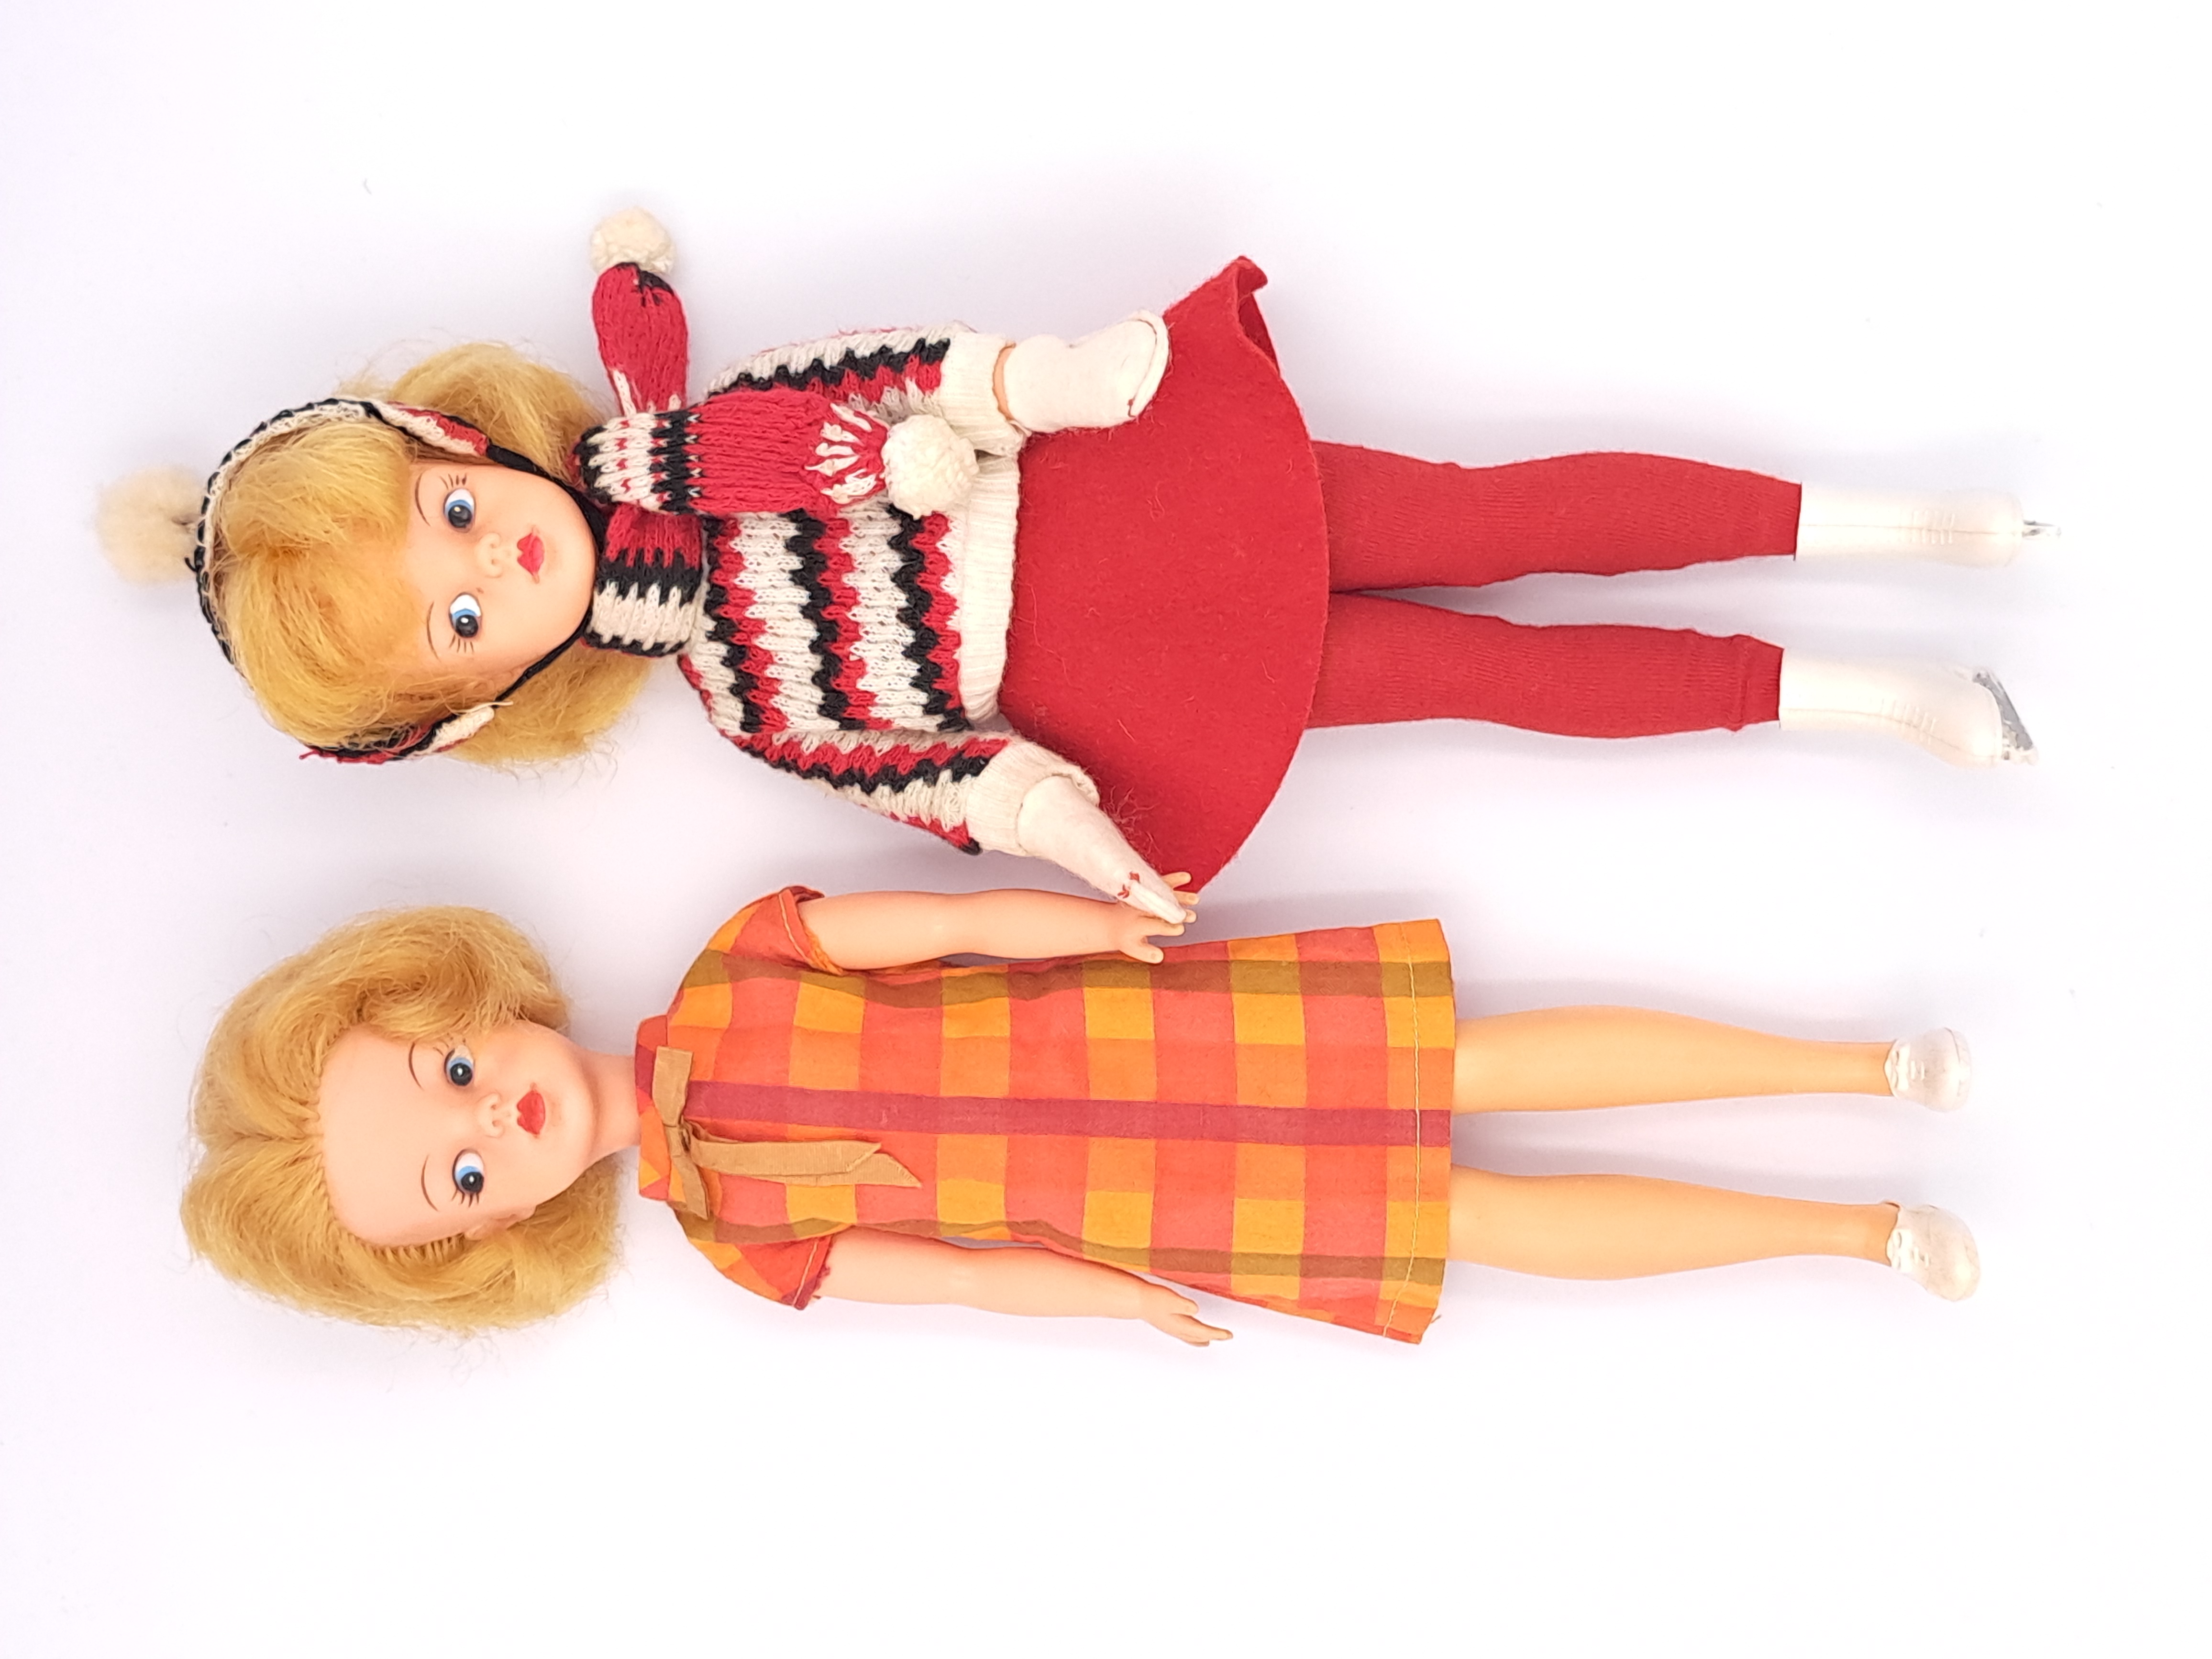 Pedigree Sindy pair of vintage dolls, blonde, 1963